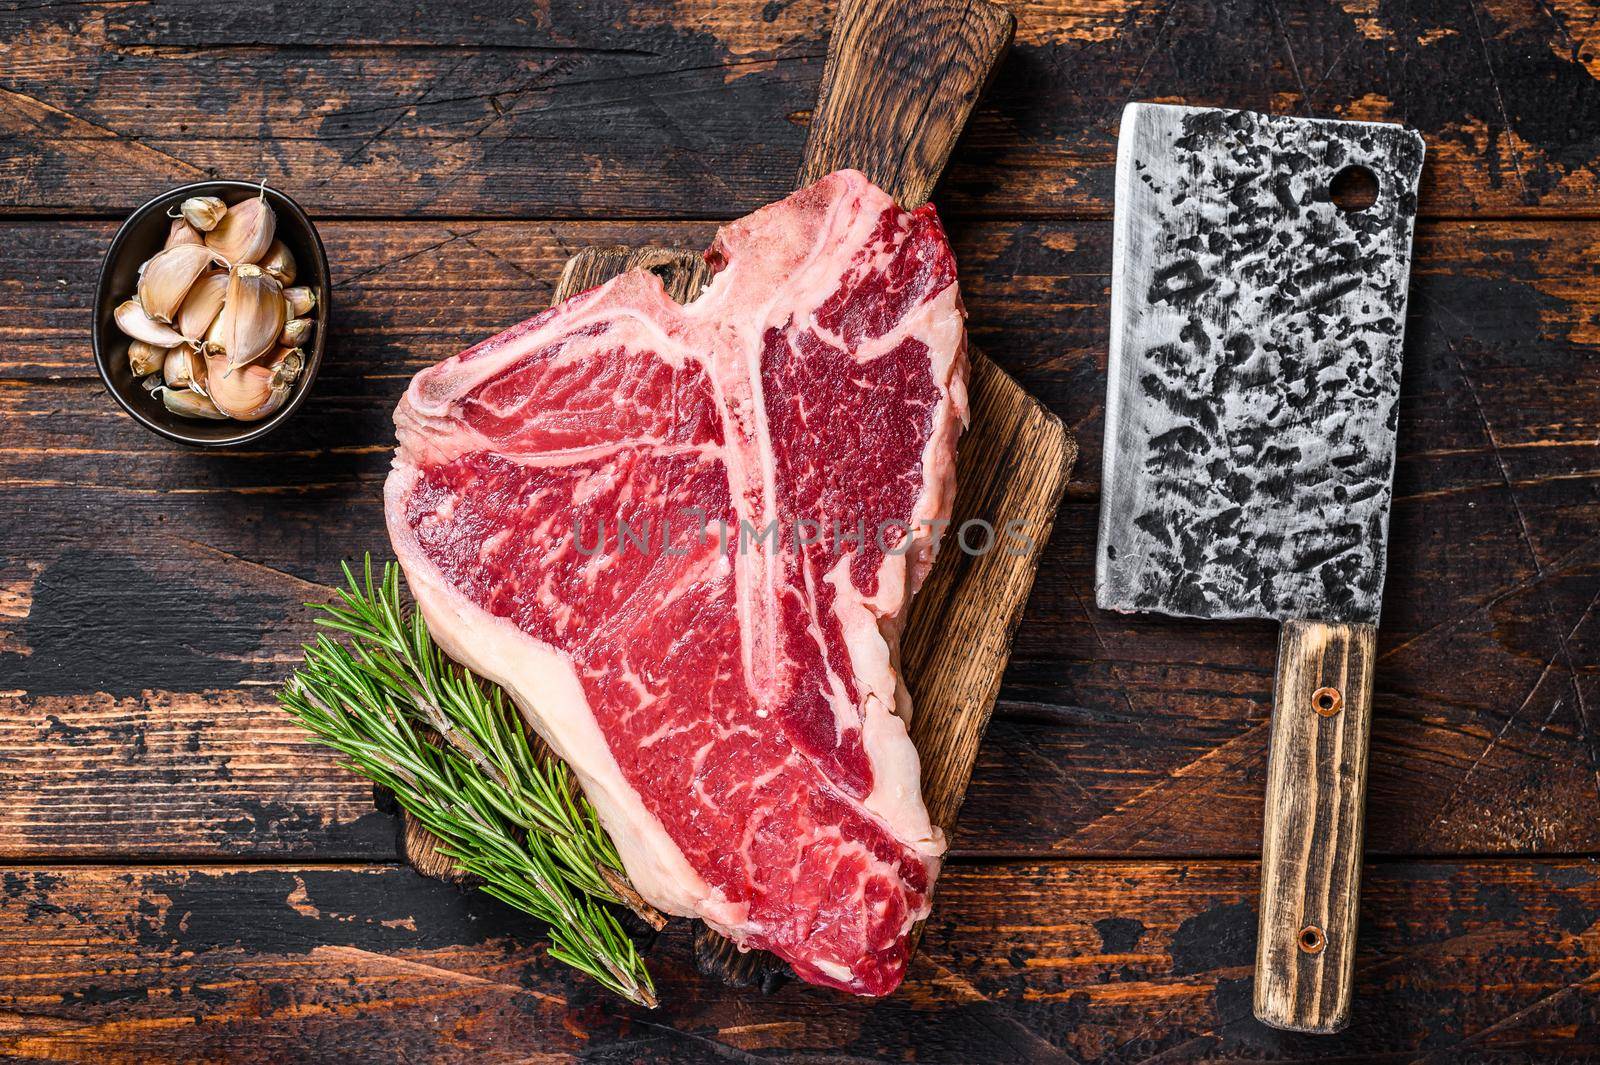 Italian Florentine T-bone beef meat Steak with herbs on a wooden cutting board. Dark wooden background. Top view.